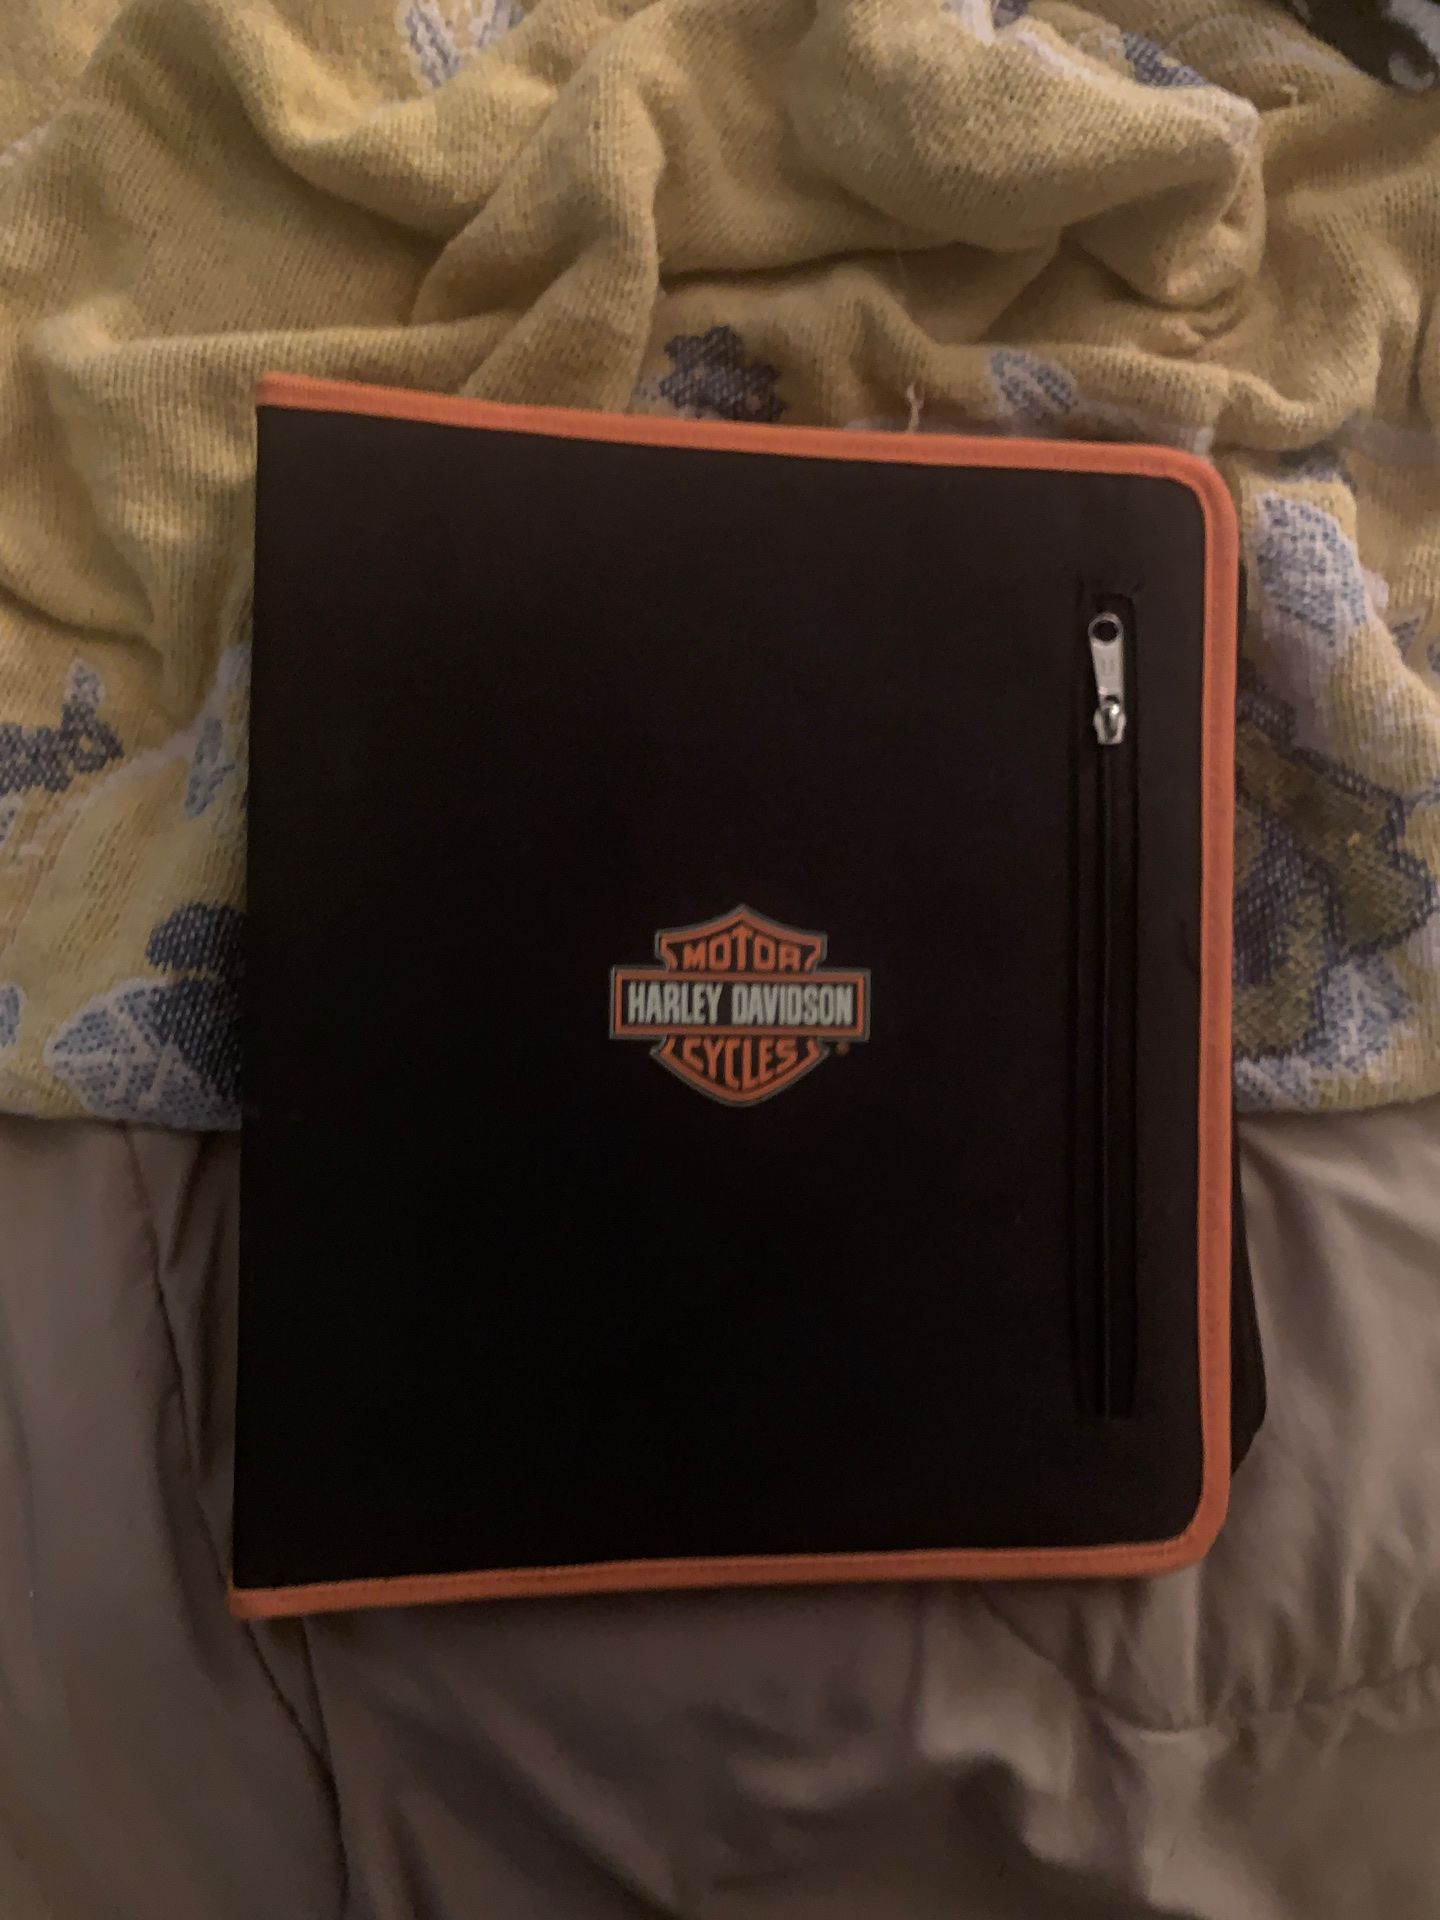 Harley Davidson unused zip around notebook for school three ring binder with pouch